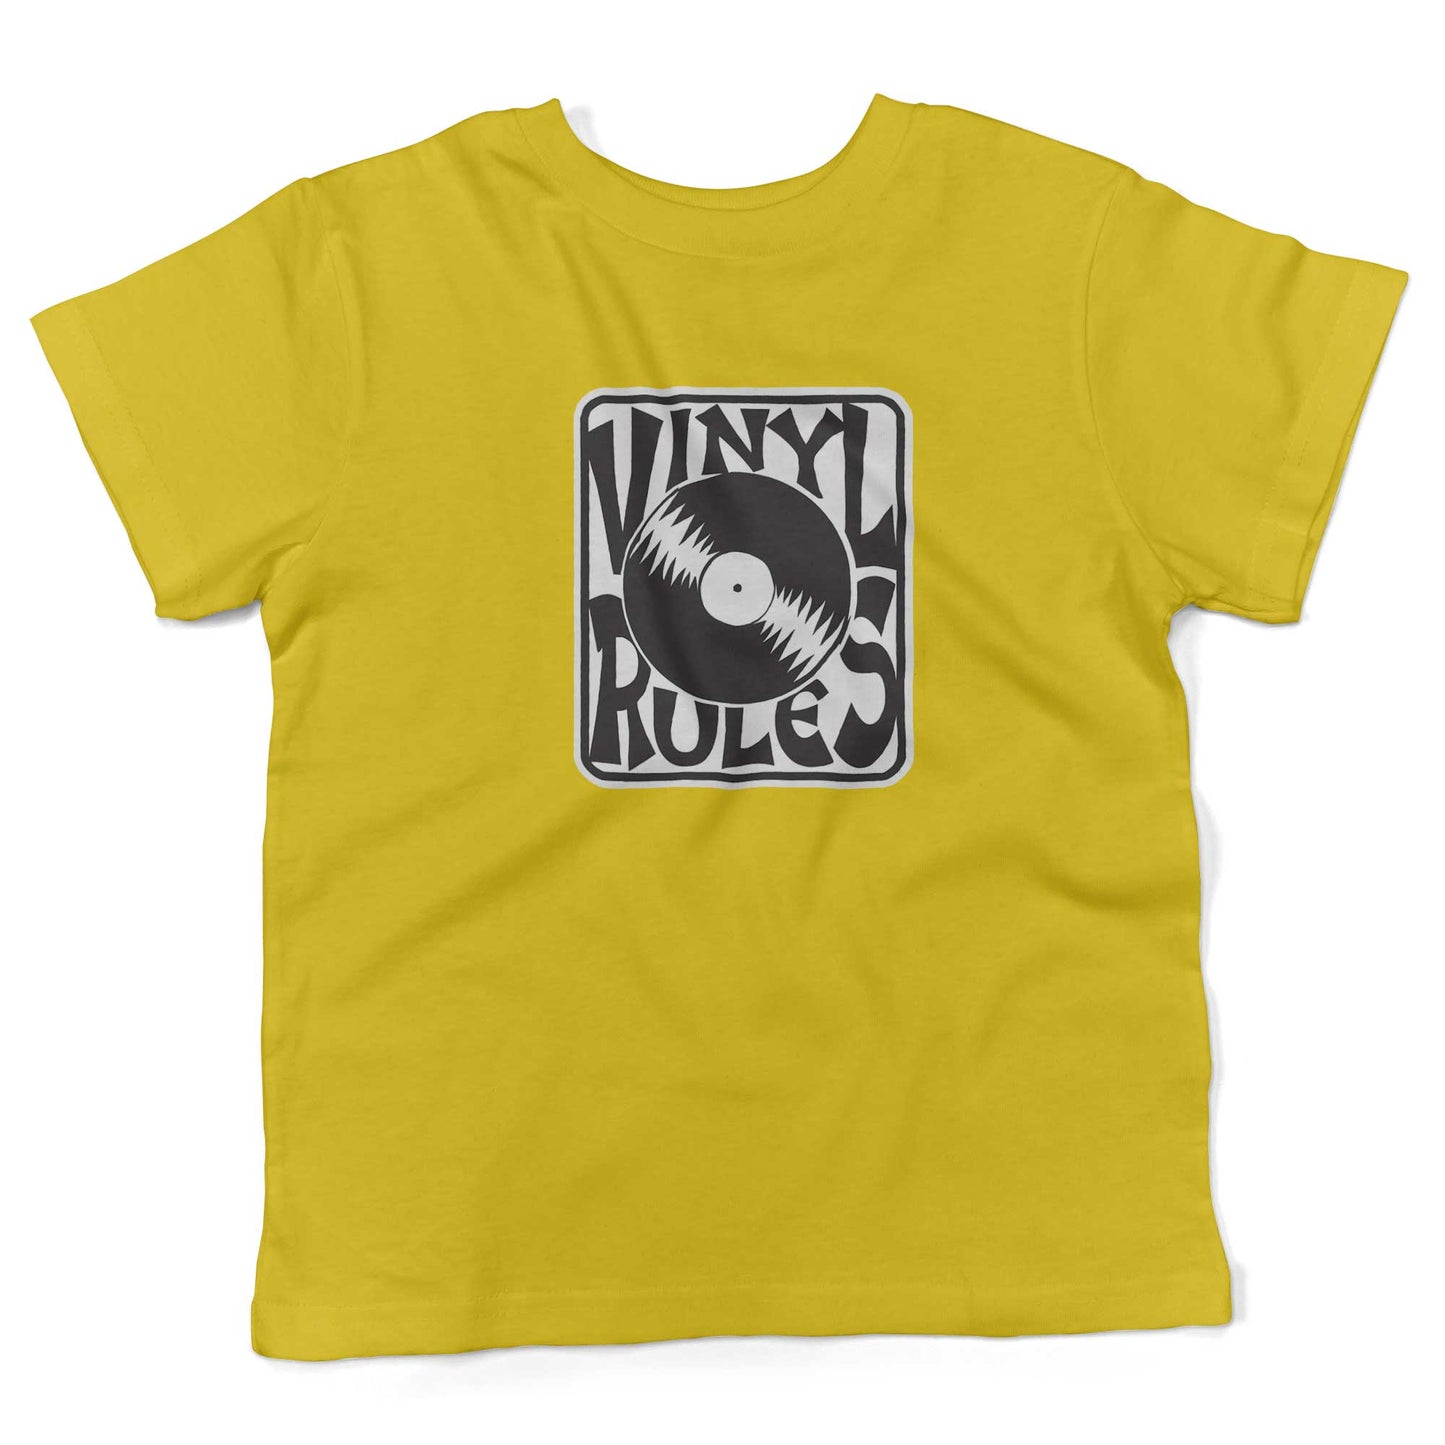 Vinyl Rules Toddler Shirt-Sunshine Yellow-2T